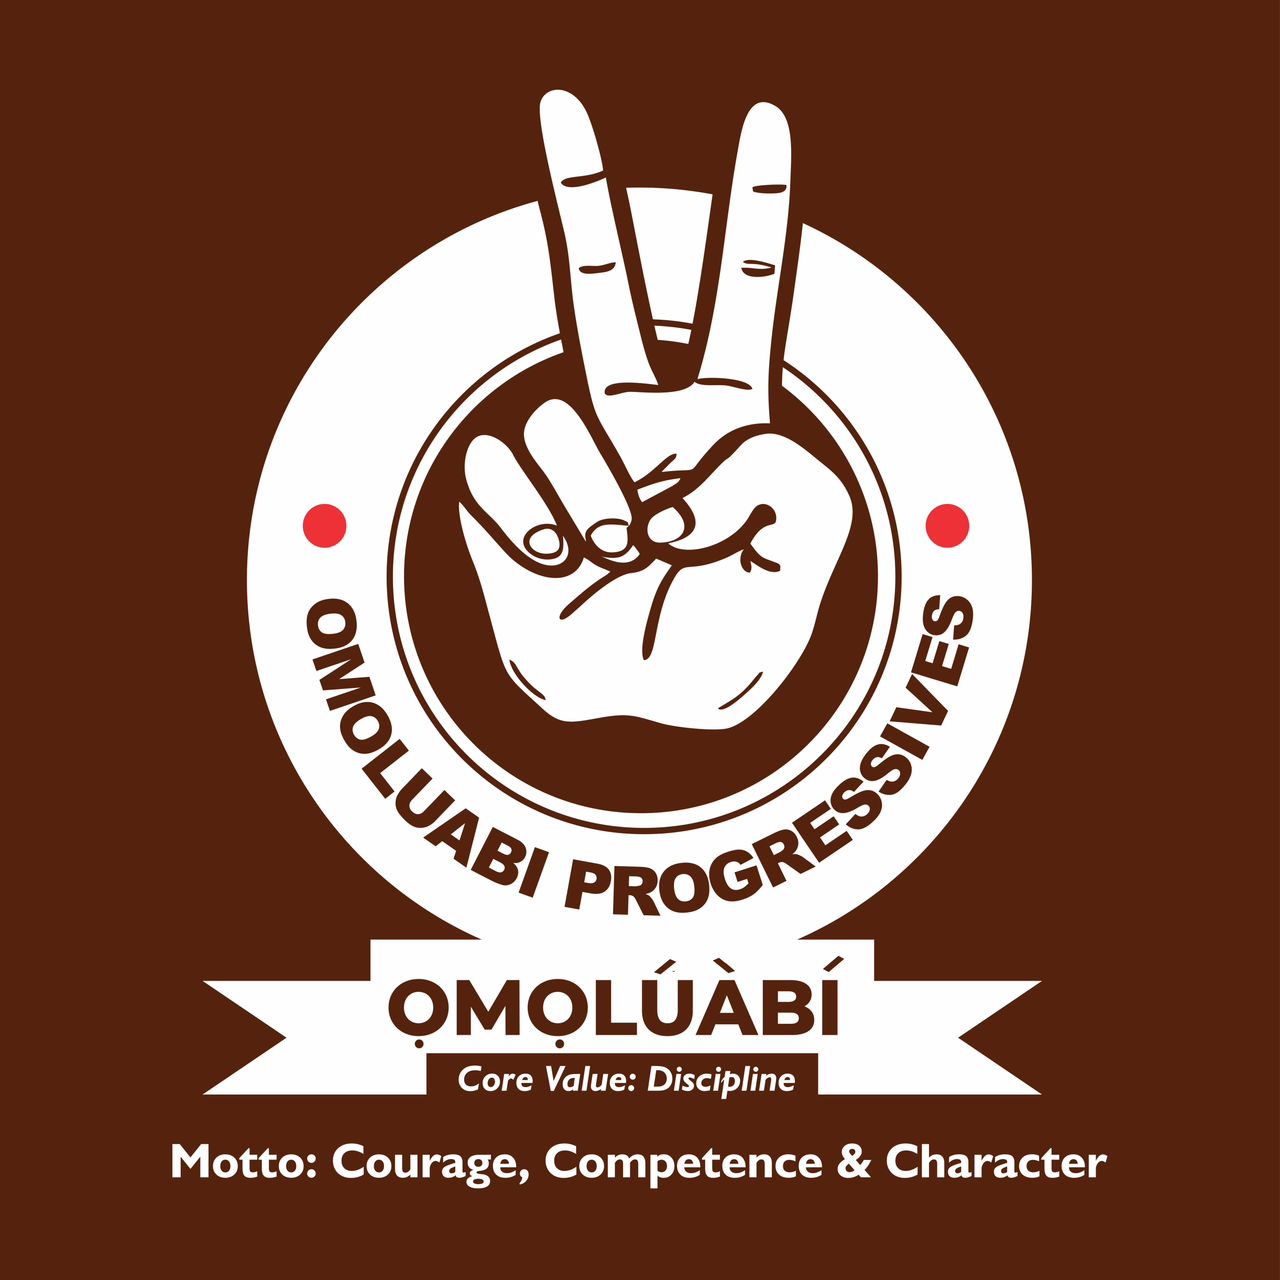 Oyetola’s Ilerioluwa APC Asks Court To Declare Omoluabi Progressives Caucus Illegal